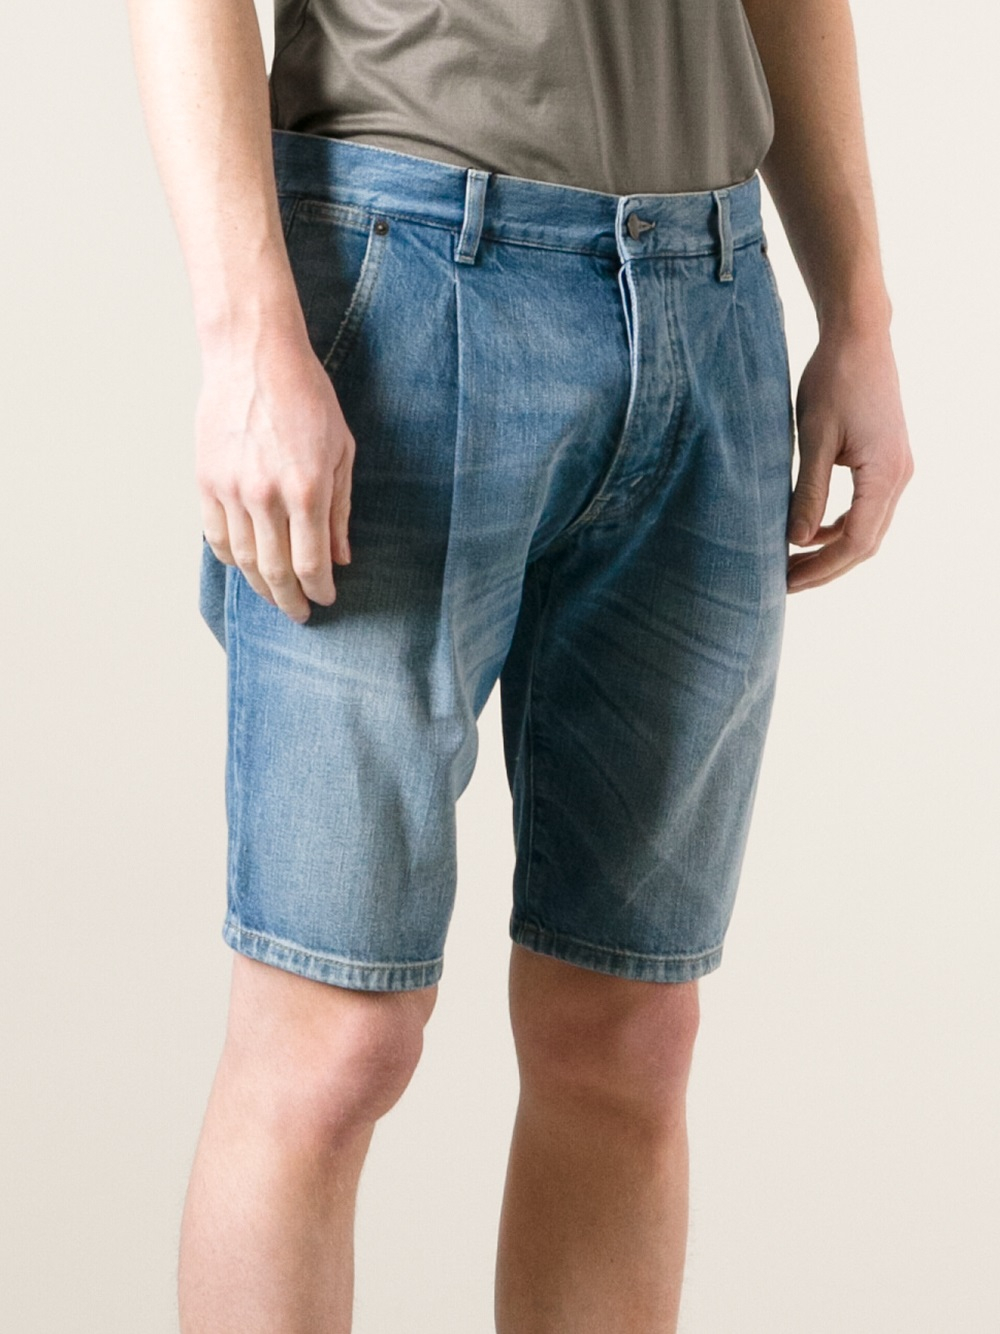 blue jean shorts mens